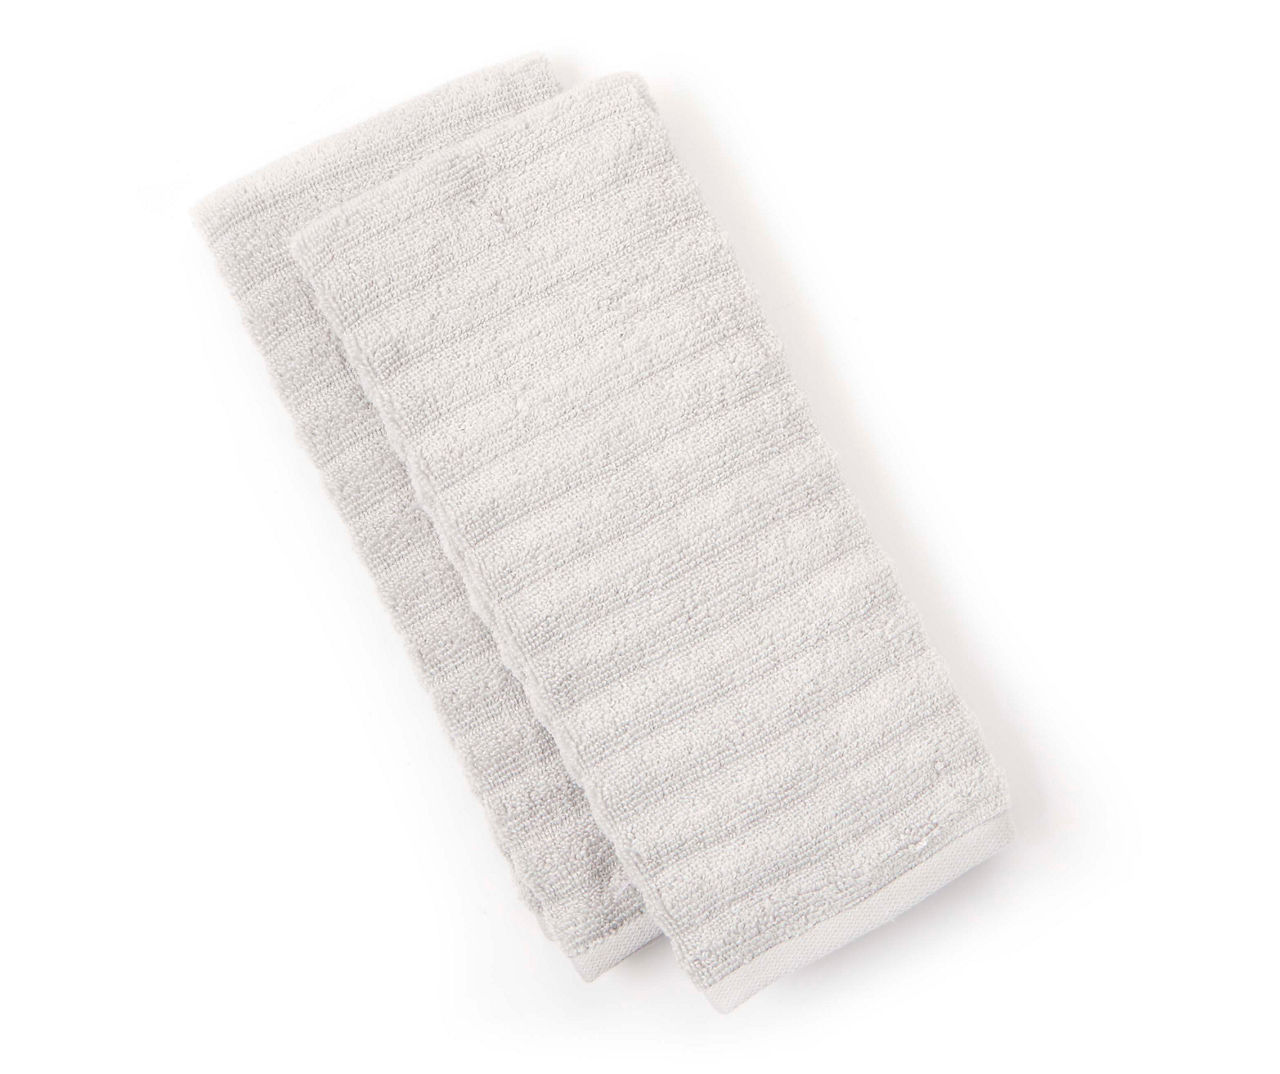 Harbor Mist Textured Stripe Hand Towel, 2-Pack